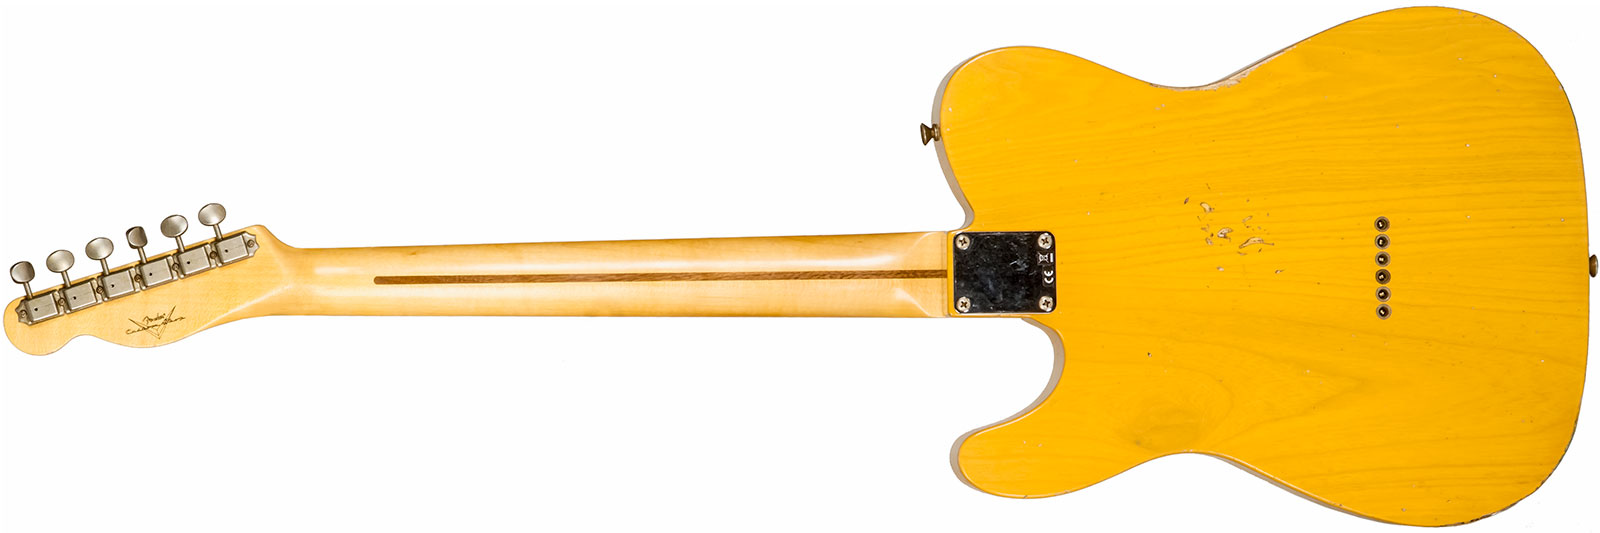 Fender Custom Shop Tele 1952 2s Ht Mn #r135225 - Relic Aged Buttercotch Blonde - Televorm elektrische gitaar - Variation 1